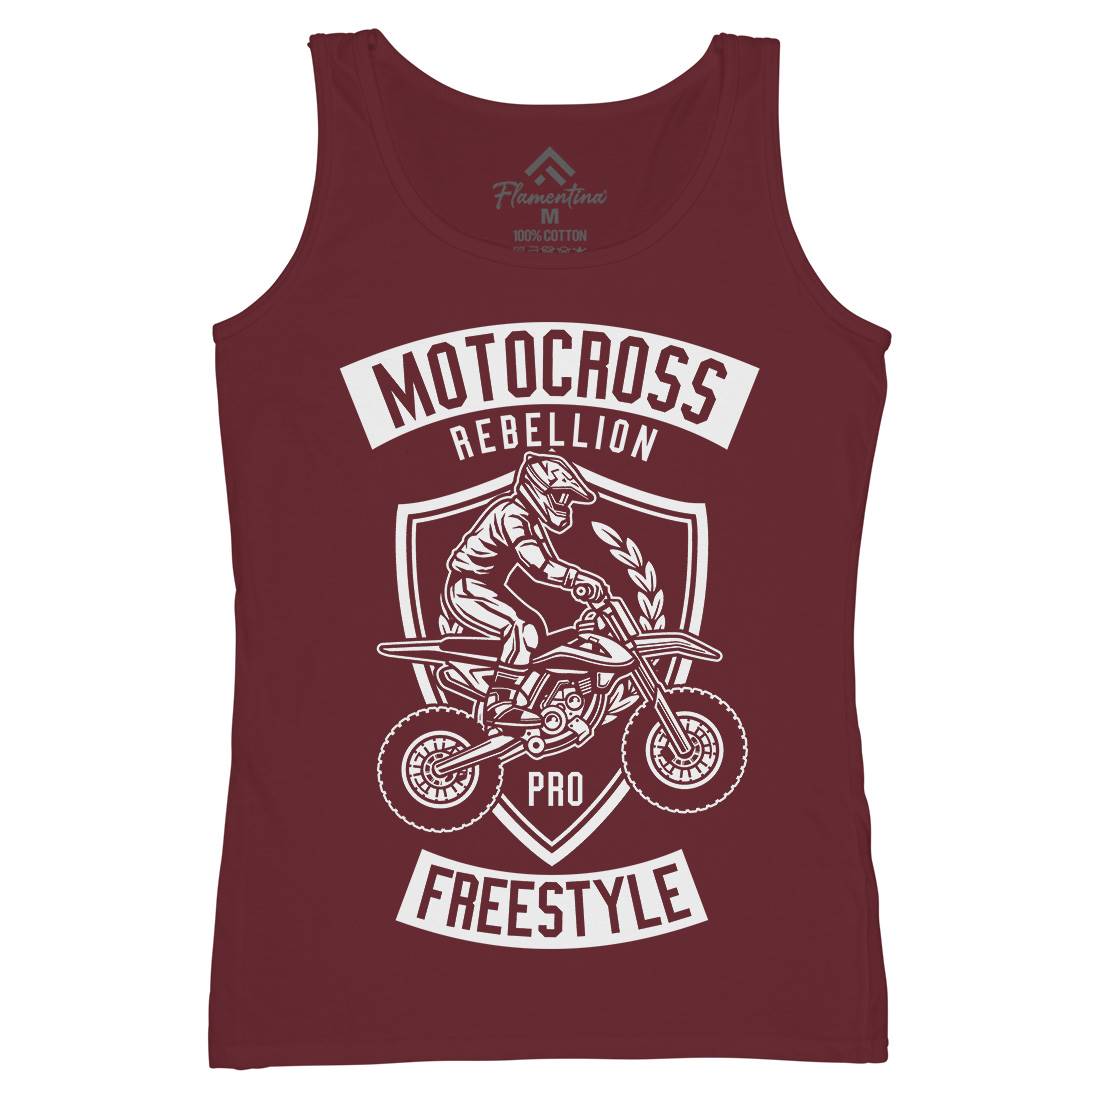 Motocross Rebellion Womens Organic Tank Top Vest Motorcycles B578